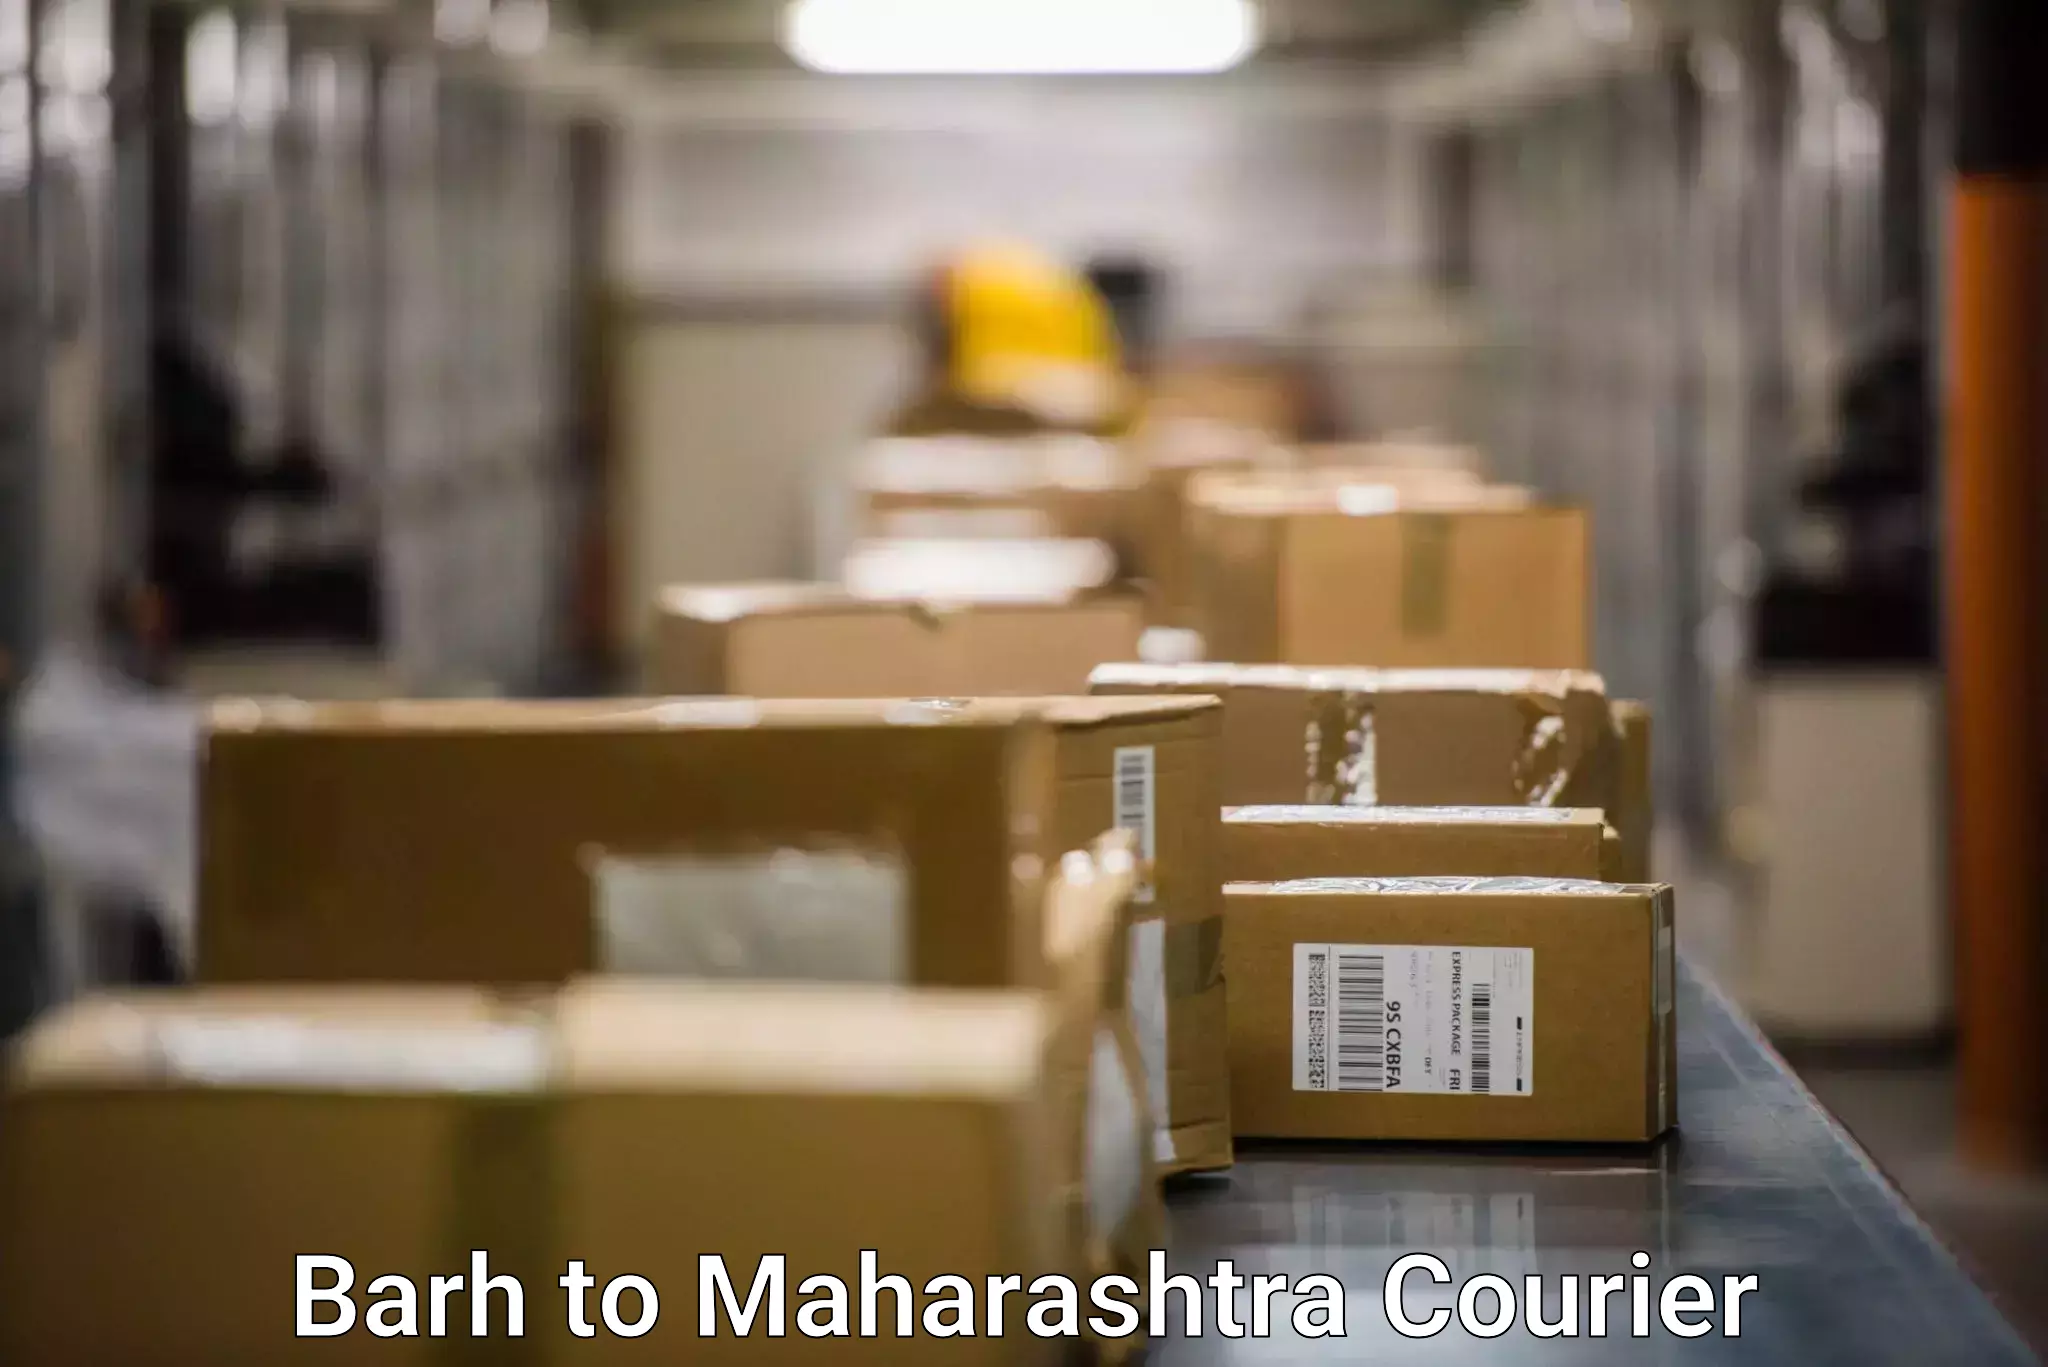 Supply chain efficiency Barh to Mahim